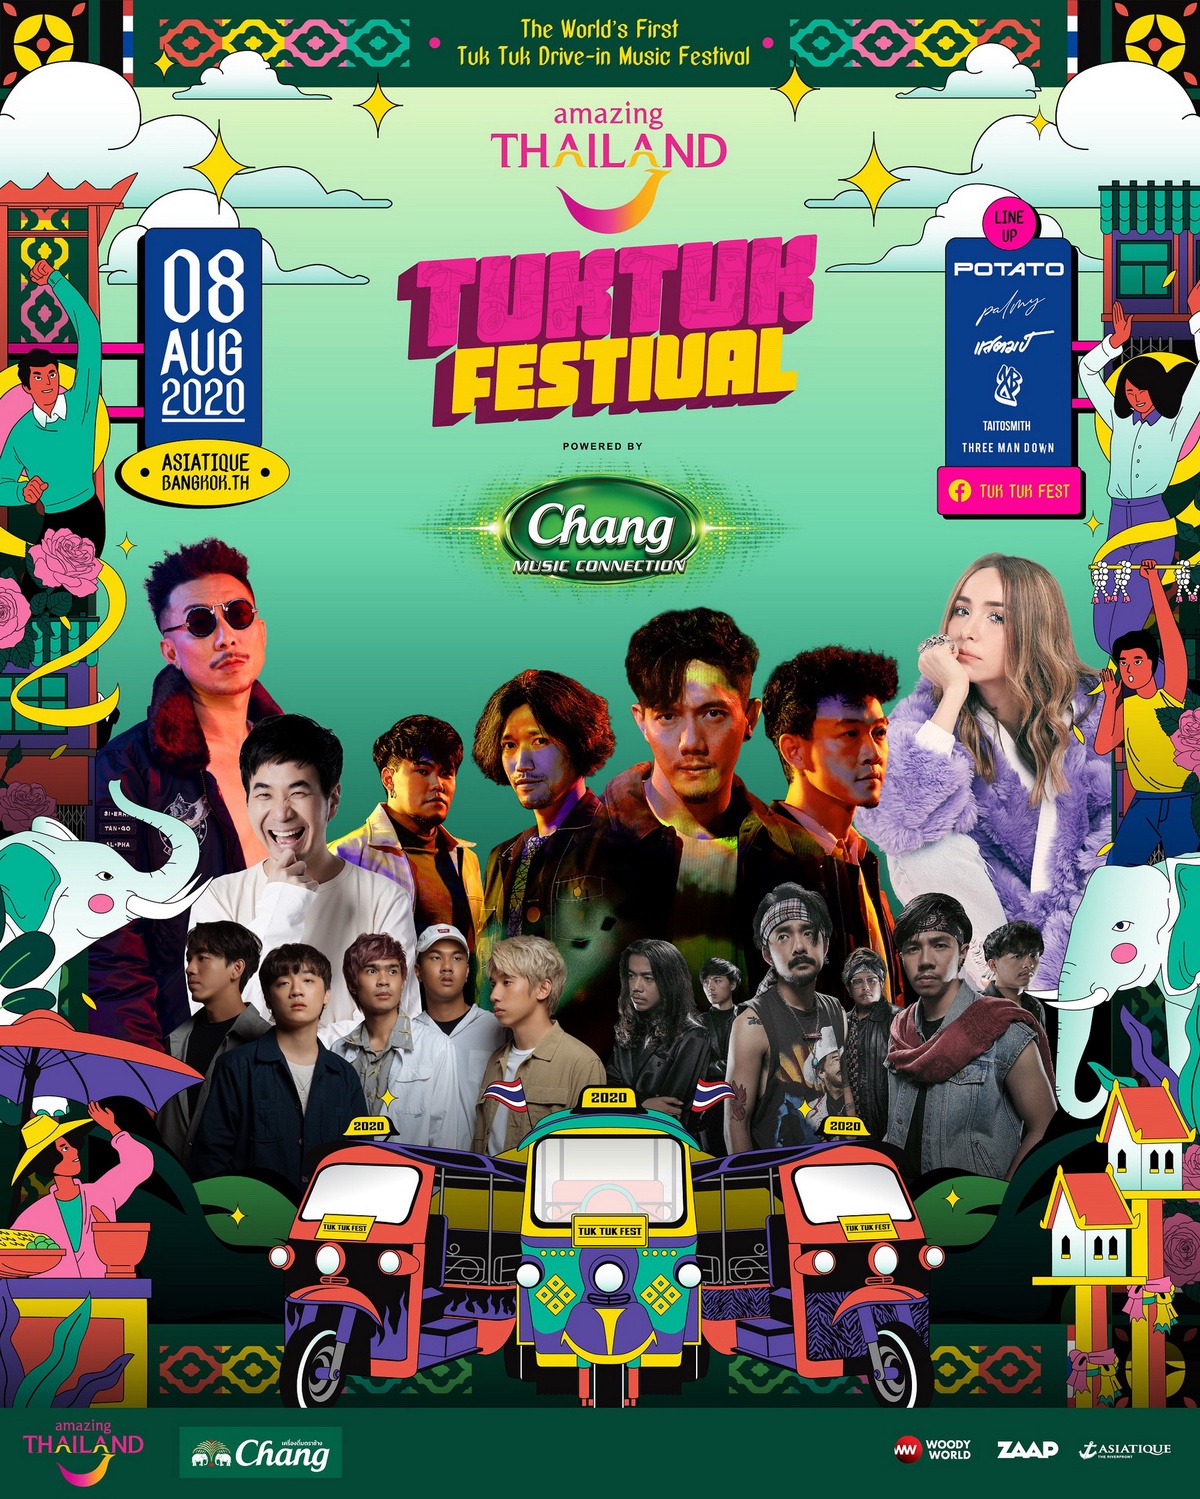 Gossip News: เอเชียทีค เดอะ ริเวอร์ฟร้อนท์ จัดคอนเสิร์ตแบบ New Normal ในงาน Amazing Thailand TUK TUK Festival Powered by Chang Music